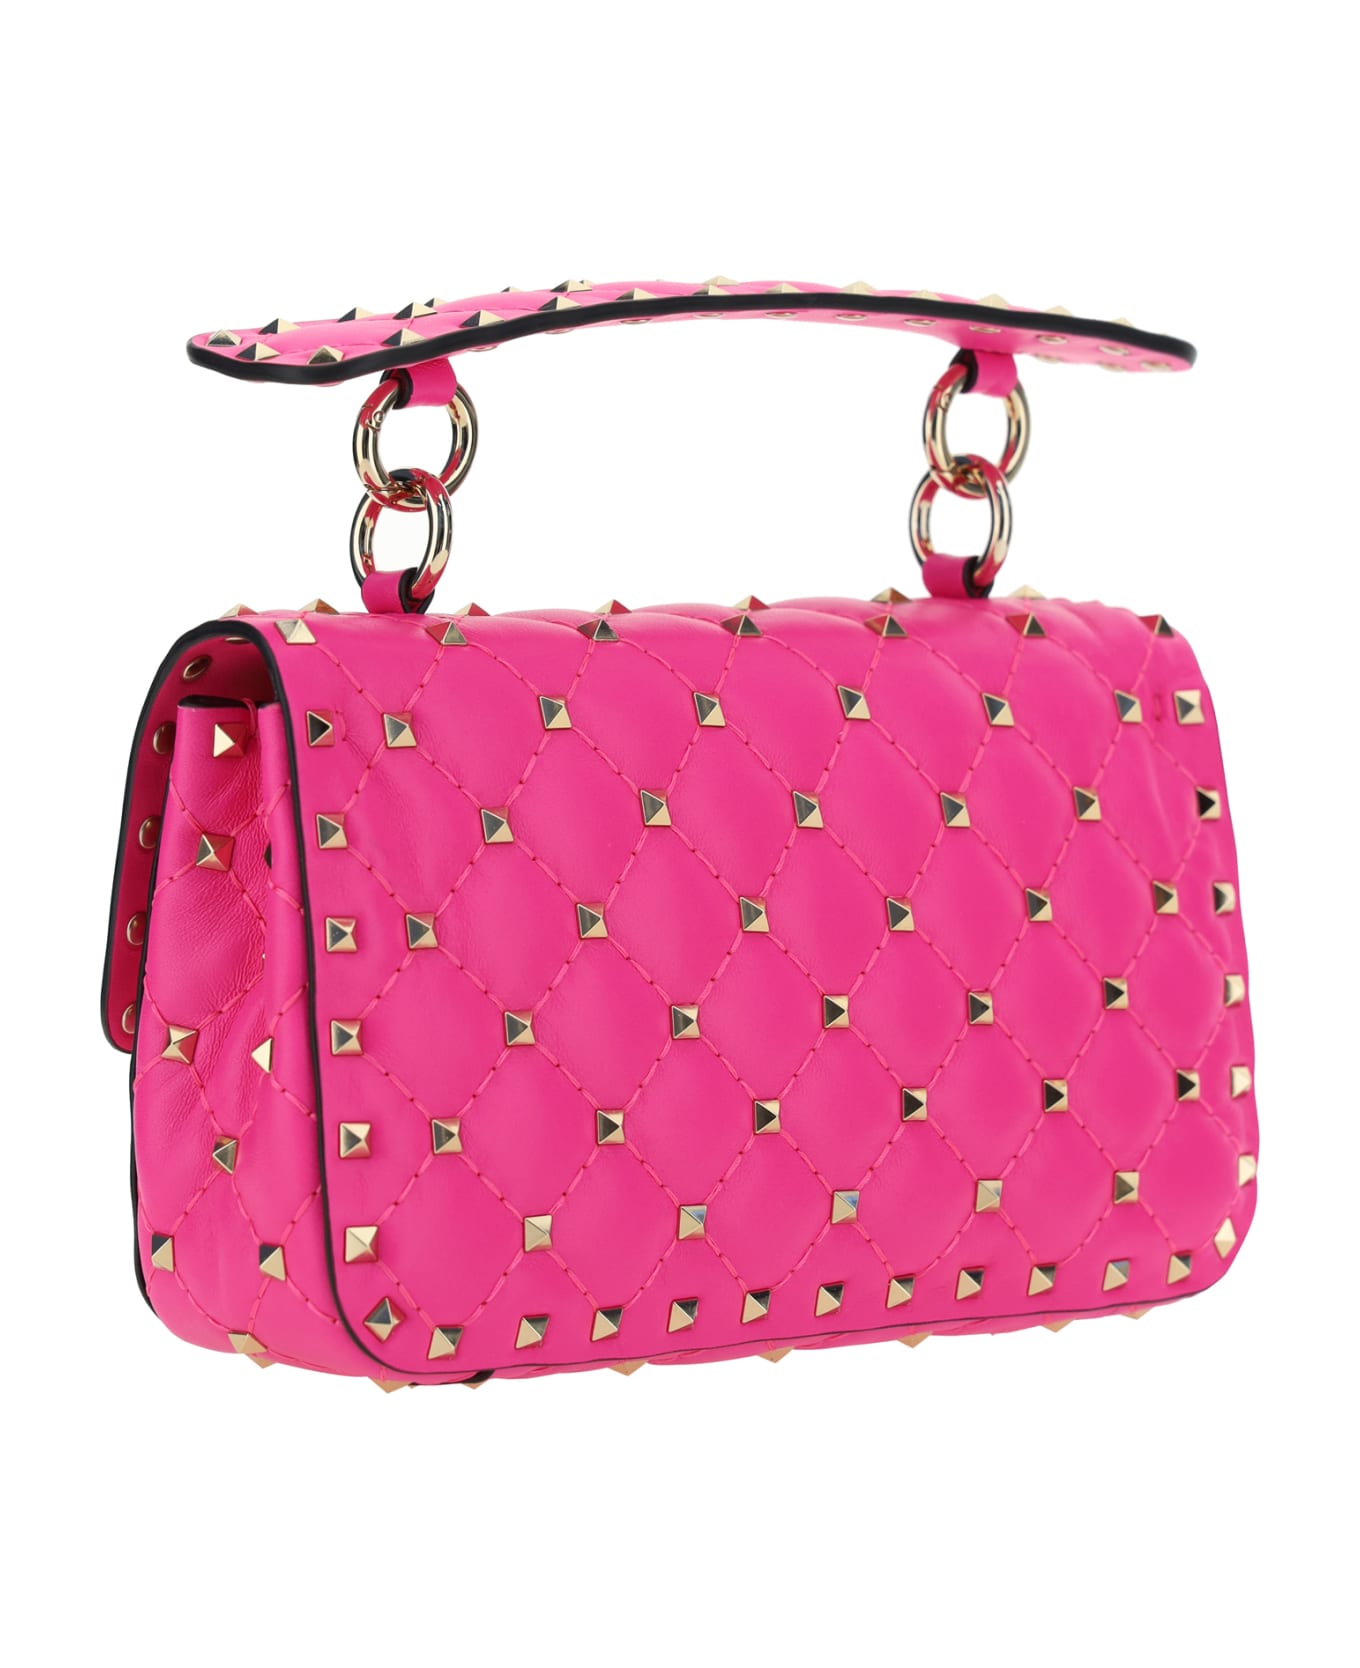 Valentino Garavani Rockstud Spike Handbag - Pink Pp トートバッグ